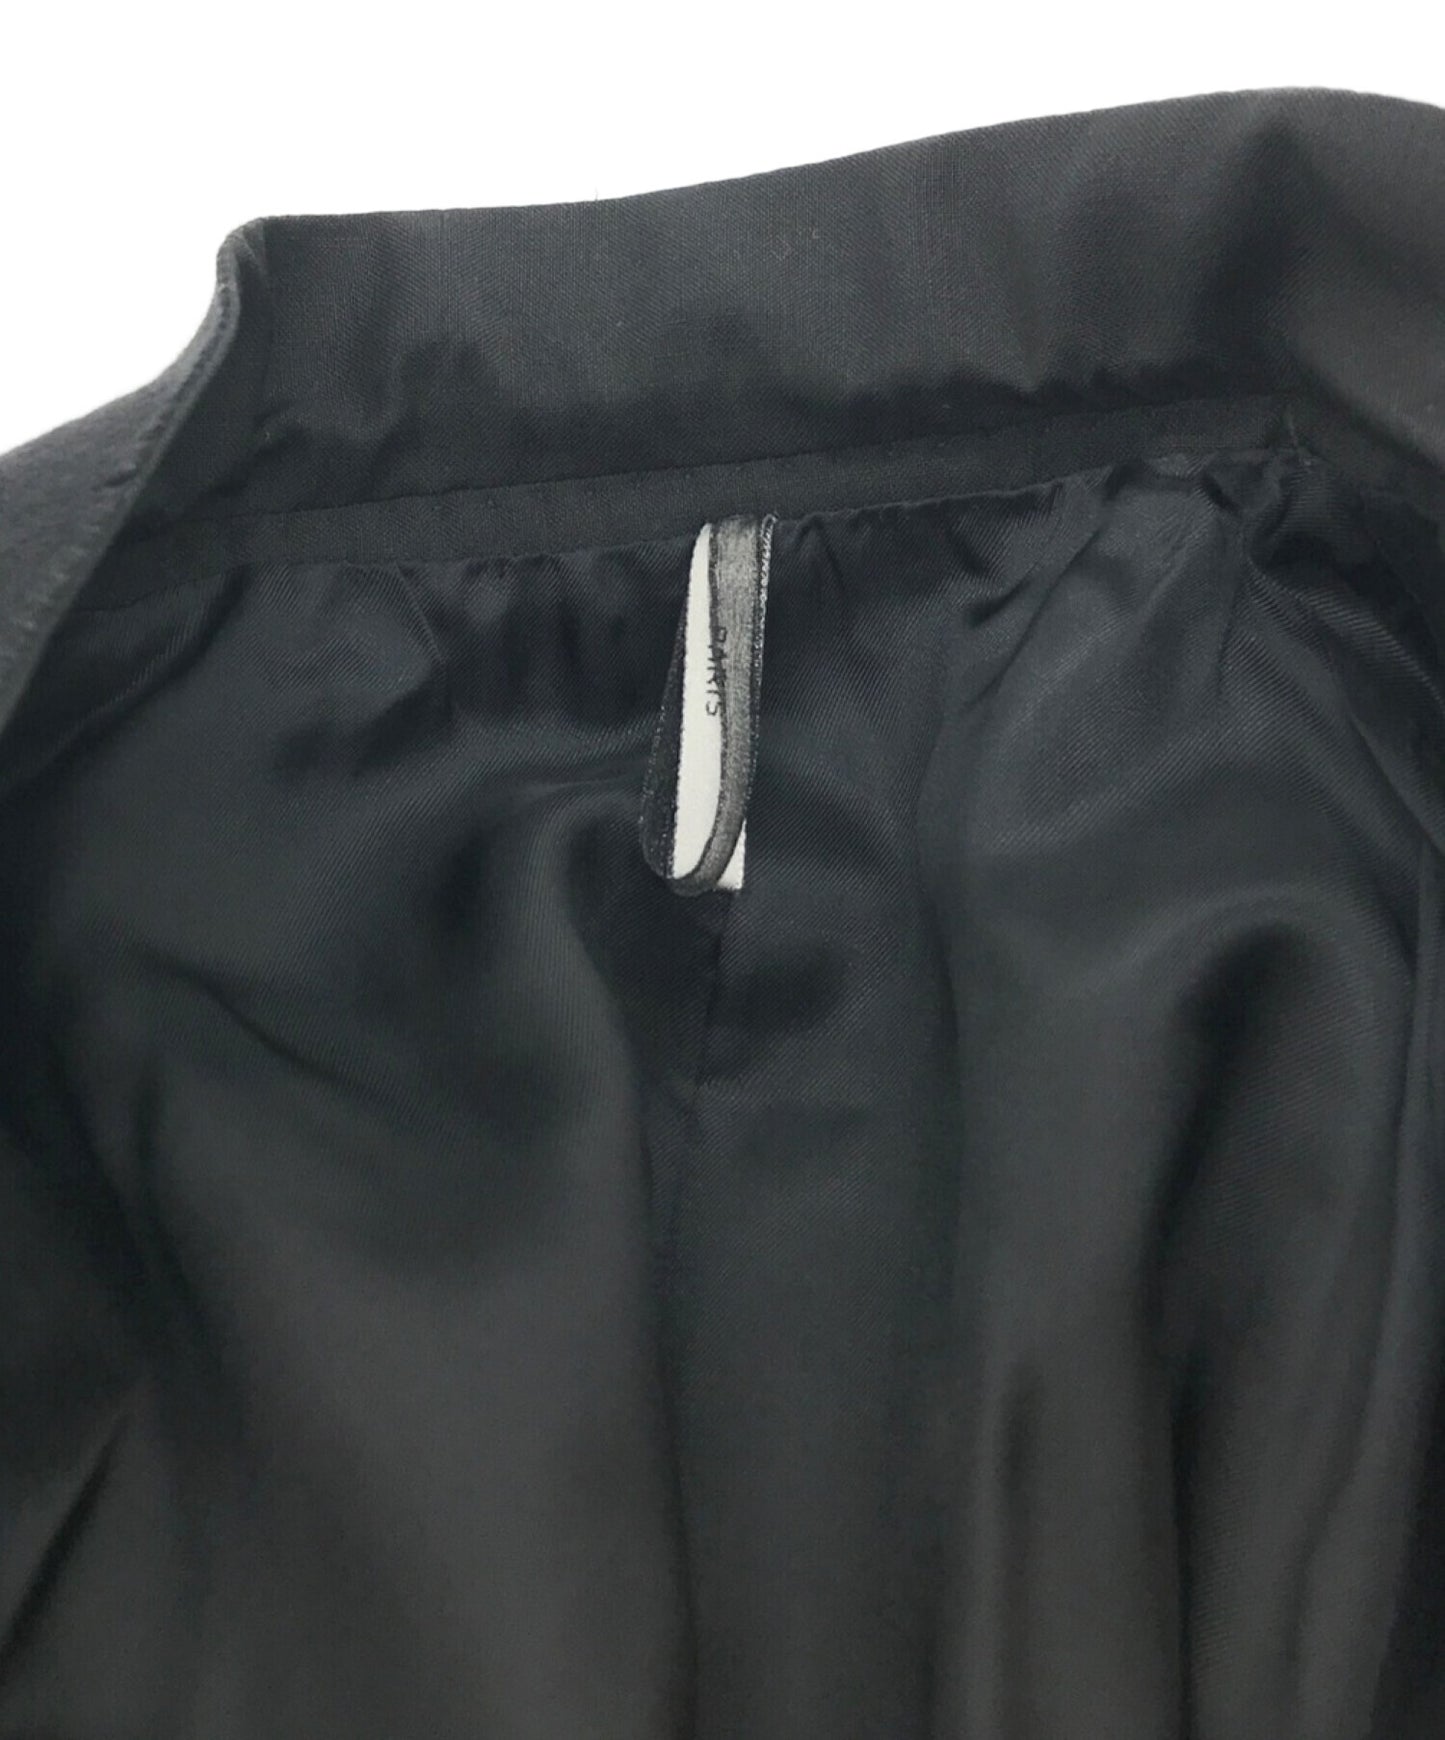 Dior Homme Set-up Suit Tailored Jacket Pants 9E3122850559